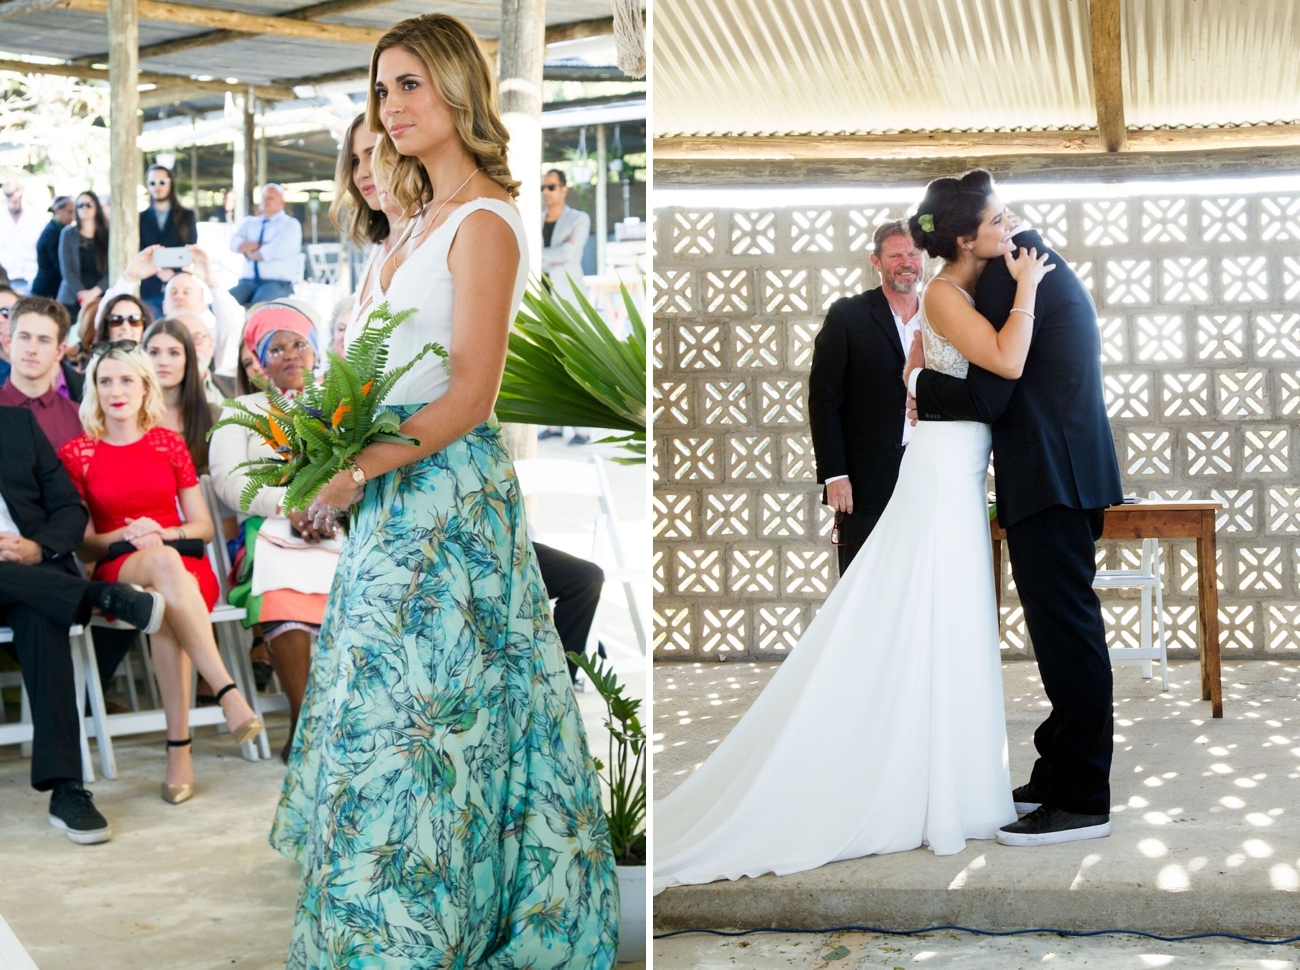 Durban North Coast Tropical Chic Wedding Ceremony | Credit: Oh Happy Day & Dane Peterson